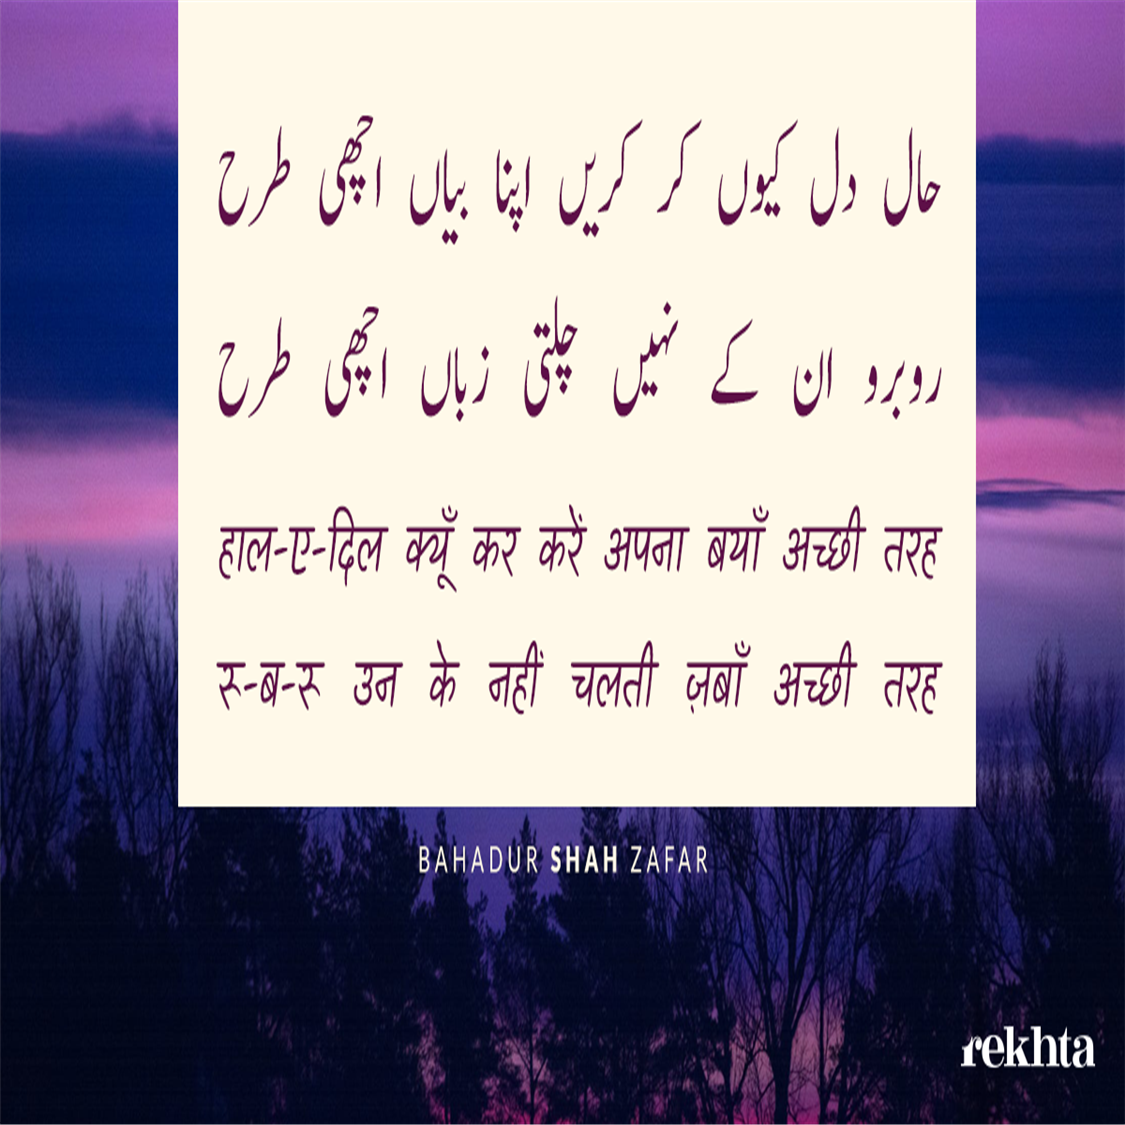 haal-e-dil kyuu.n kar kare.n apnaa bayaa.n achchhii tarah-Bahadur Shah Zafar